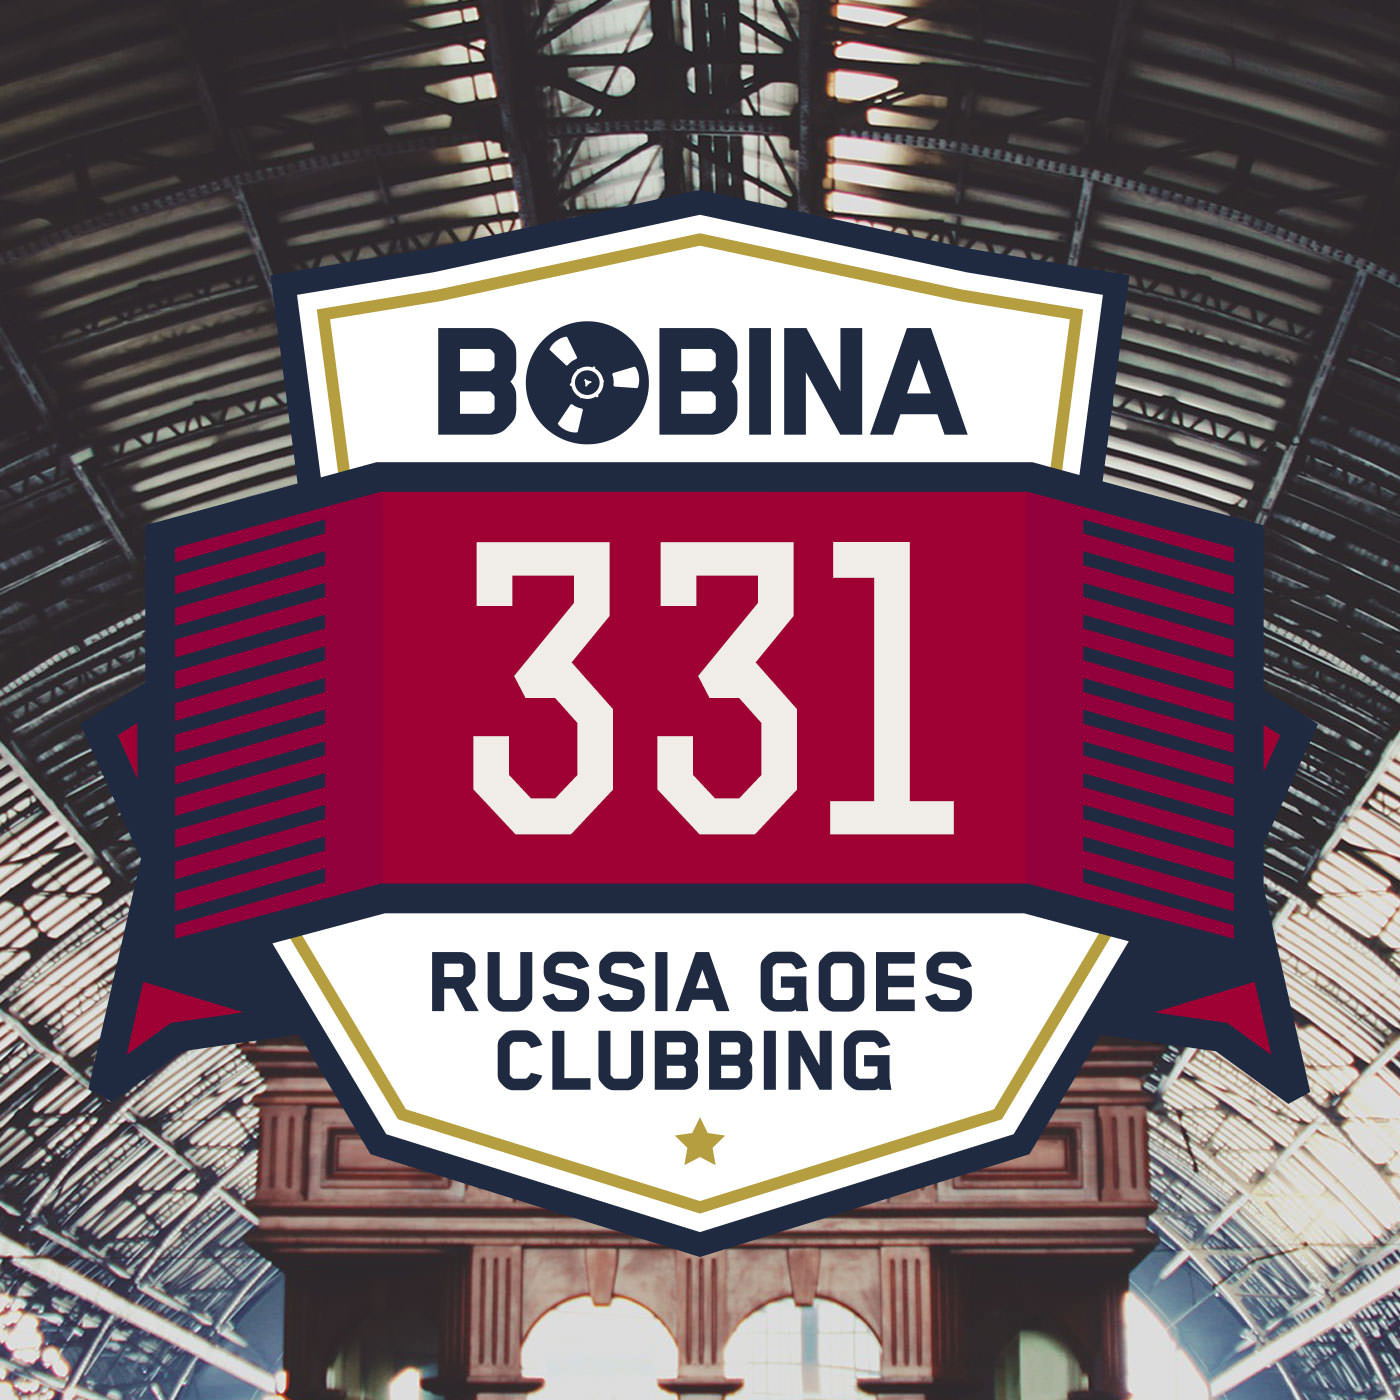 Nr. 331 Russia Goes Clubbing